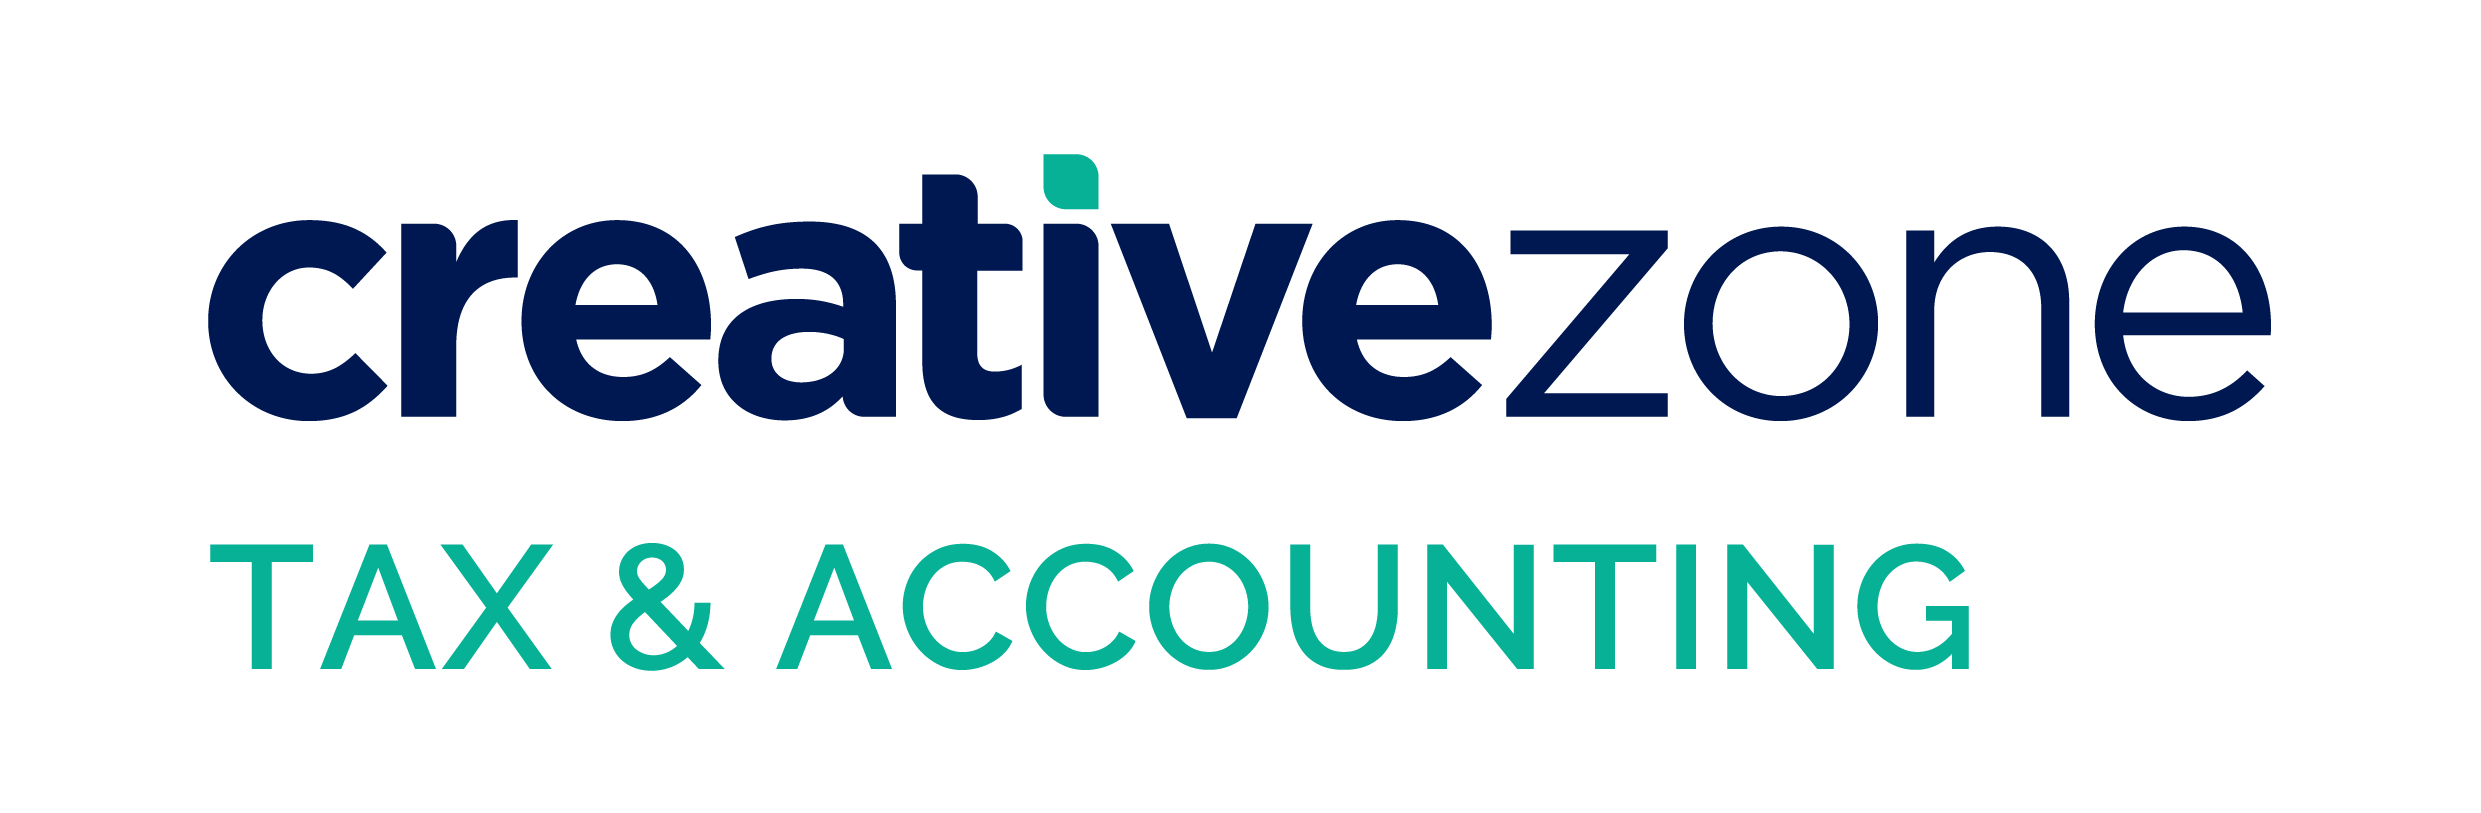 Creative Tax & Accounting